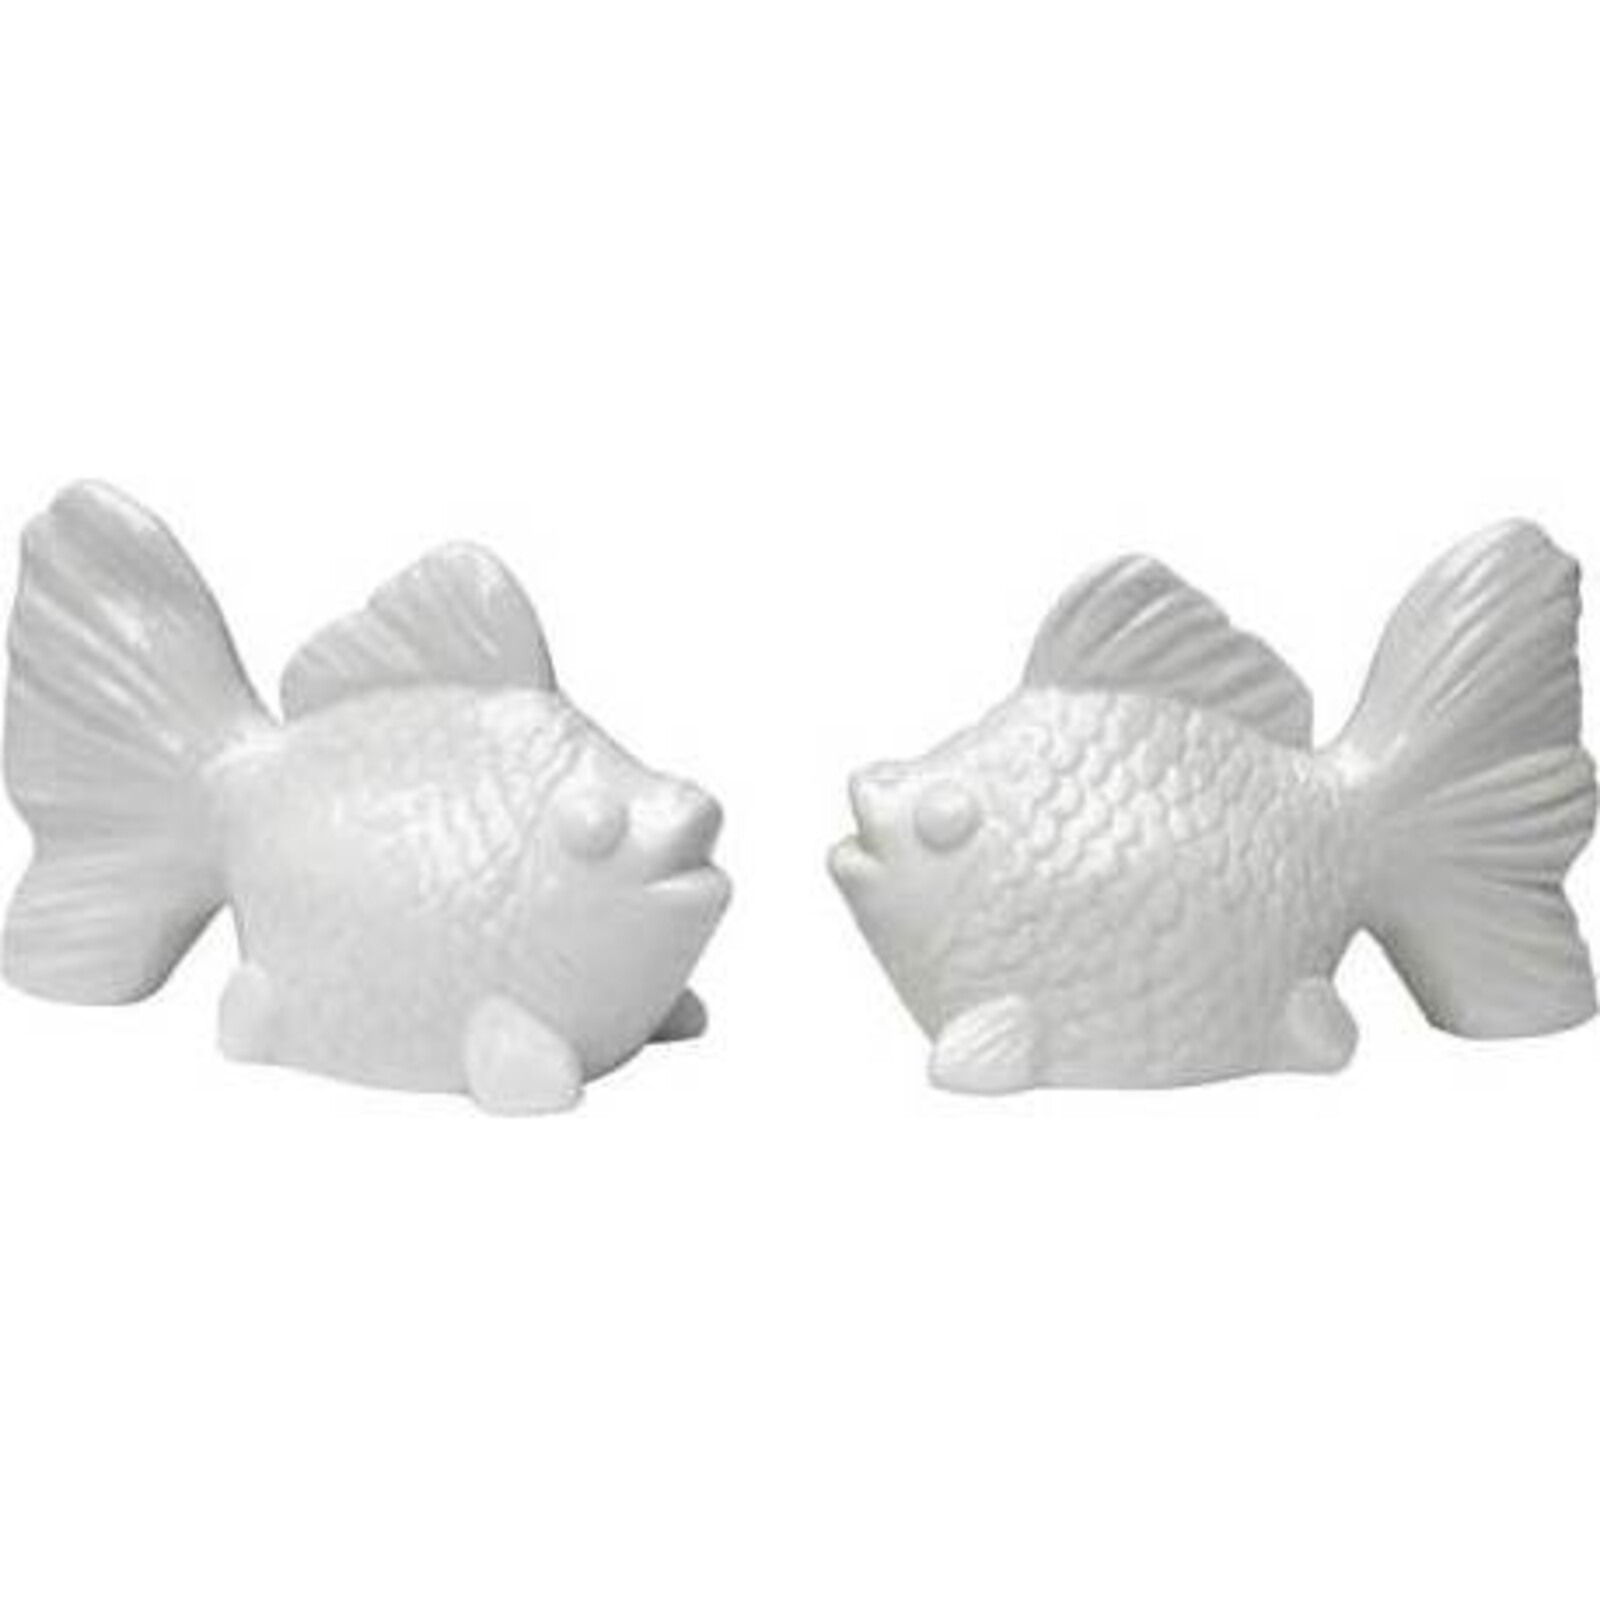 Goldfish Liso White S/2